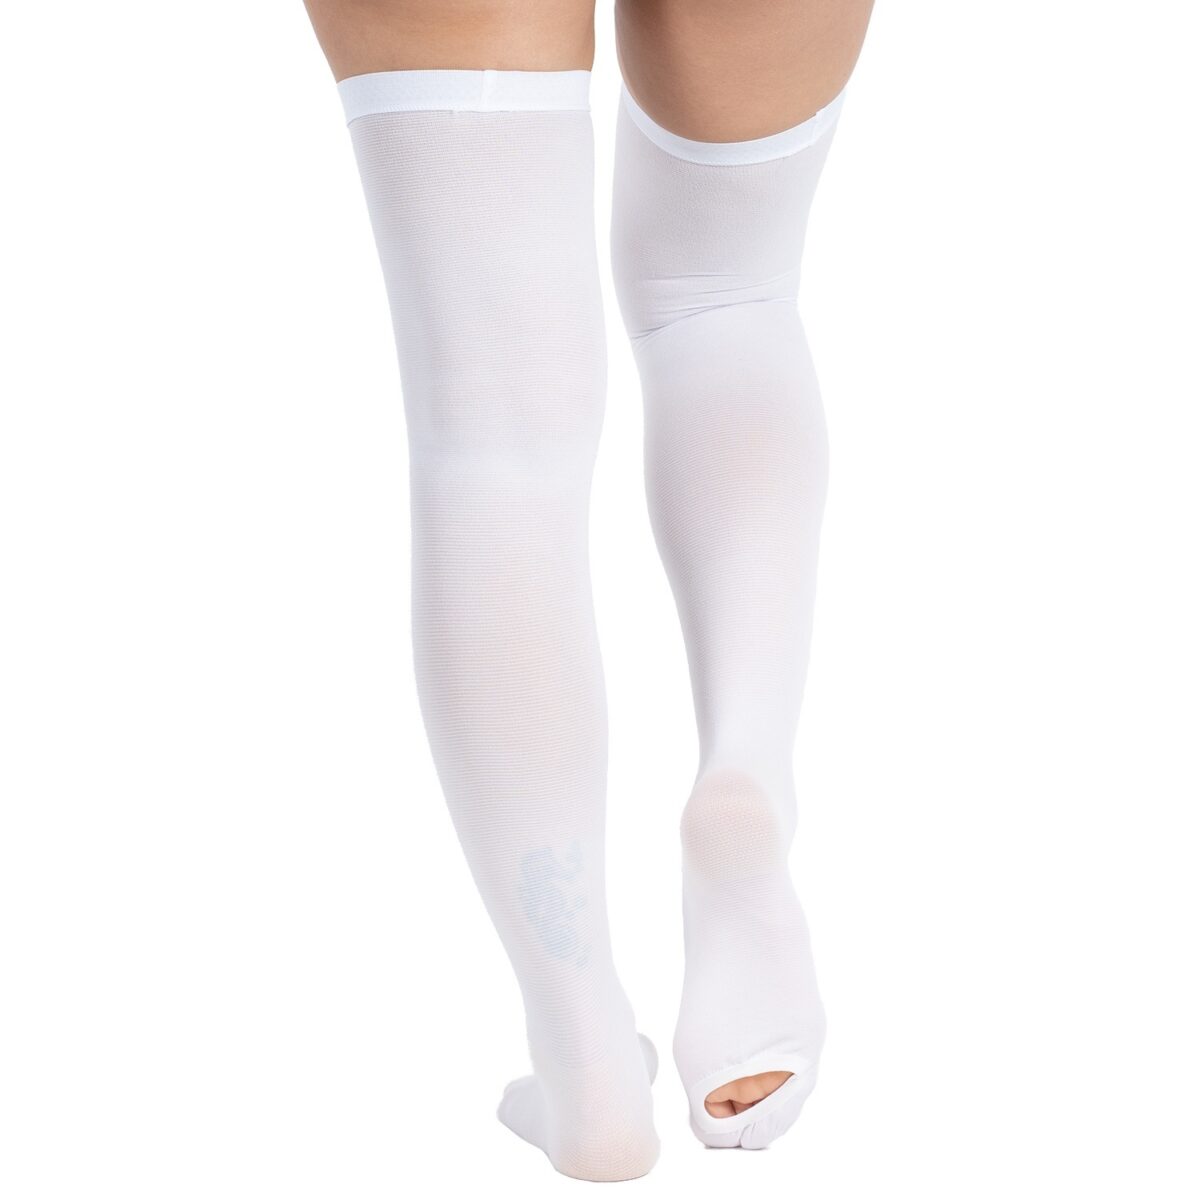 wingmed orthopedic equipments W1320 anti embolism stockings thigh high pair 21